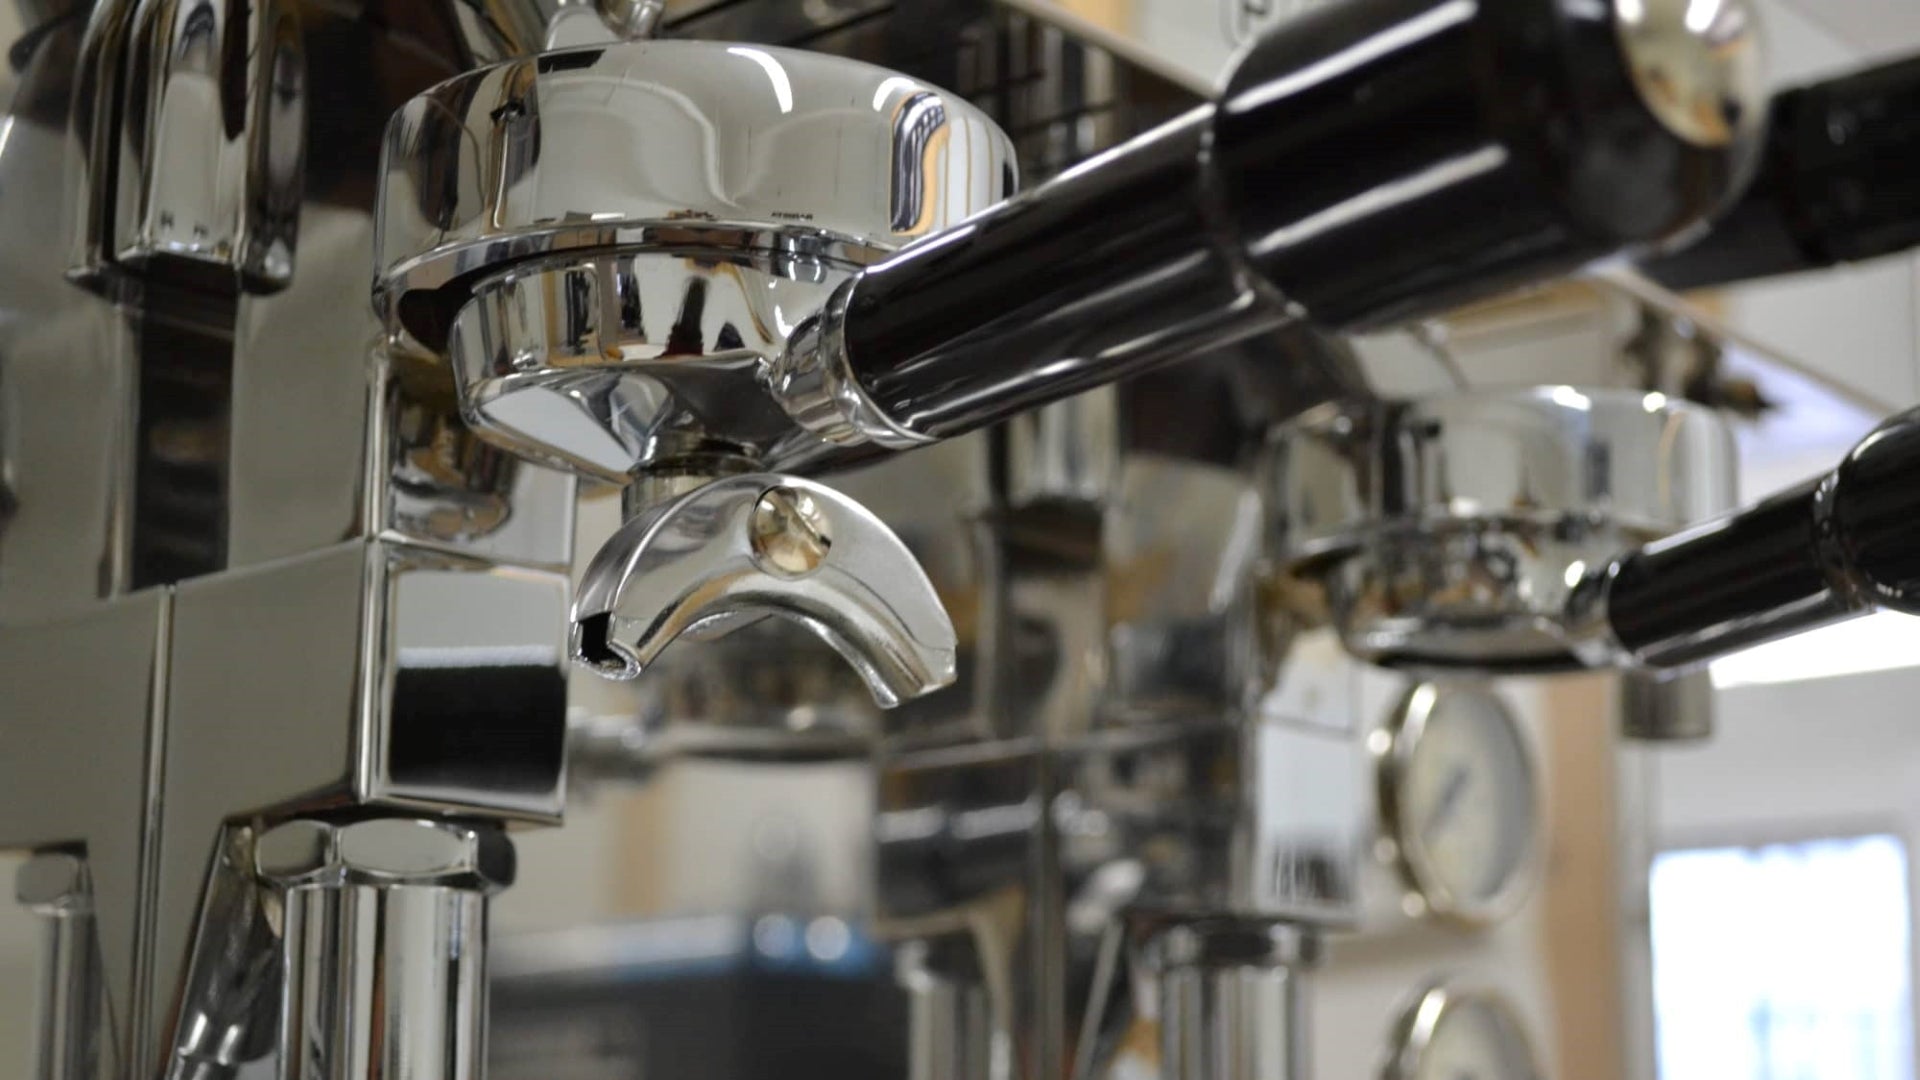 Entretien de machine espresso: le guide complet - Café Barista